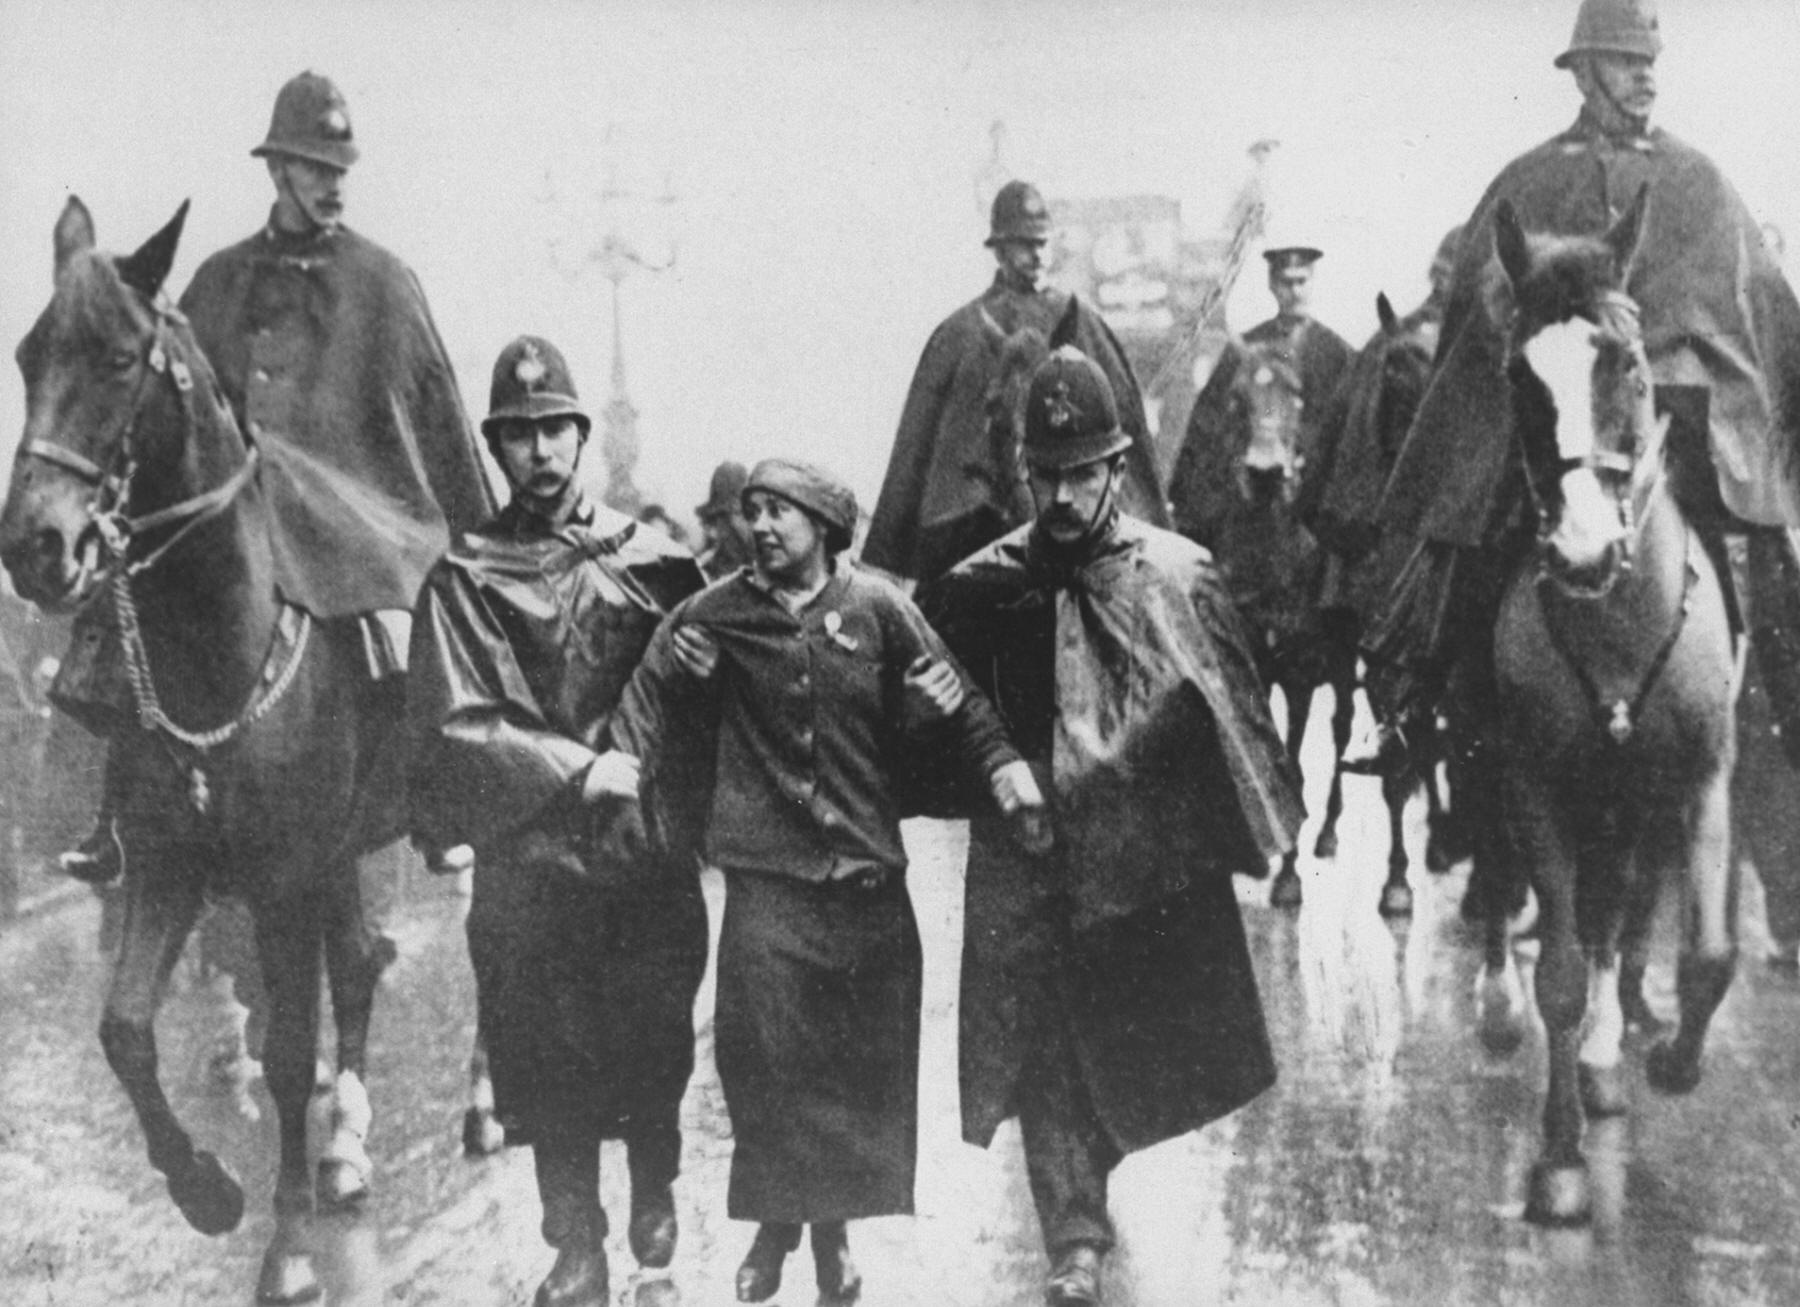 hist_uk_20_suffra_pic_pankhurst_sylvia_police_trafalgar_london_1912_g_19sep2015.jpg